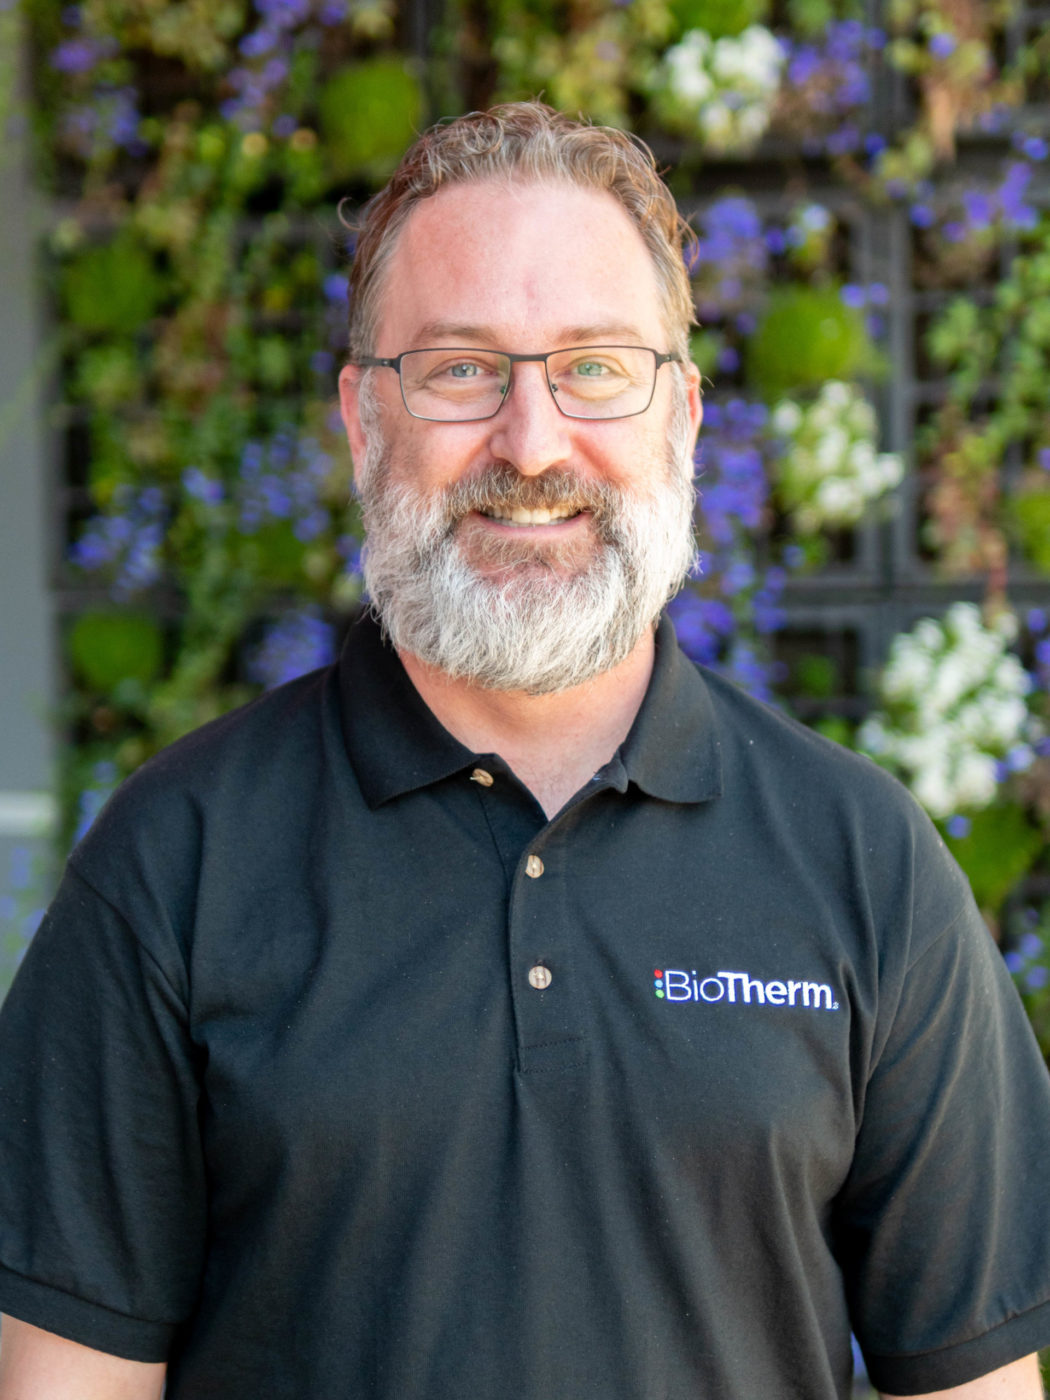 biotherm solutions staff member thad humphrey